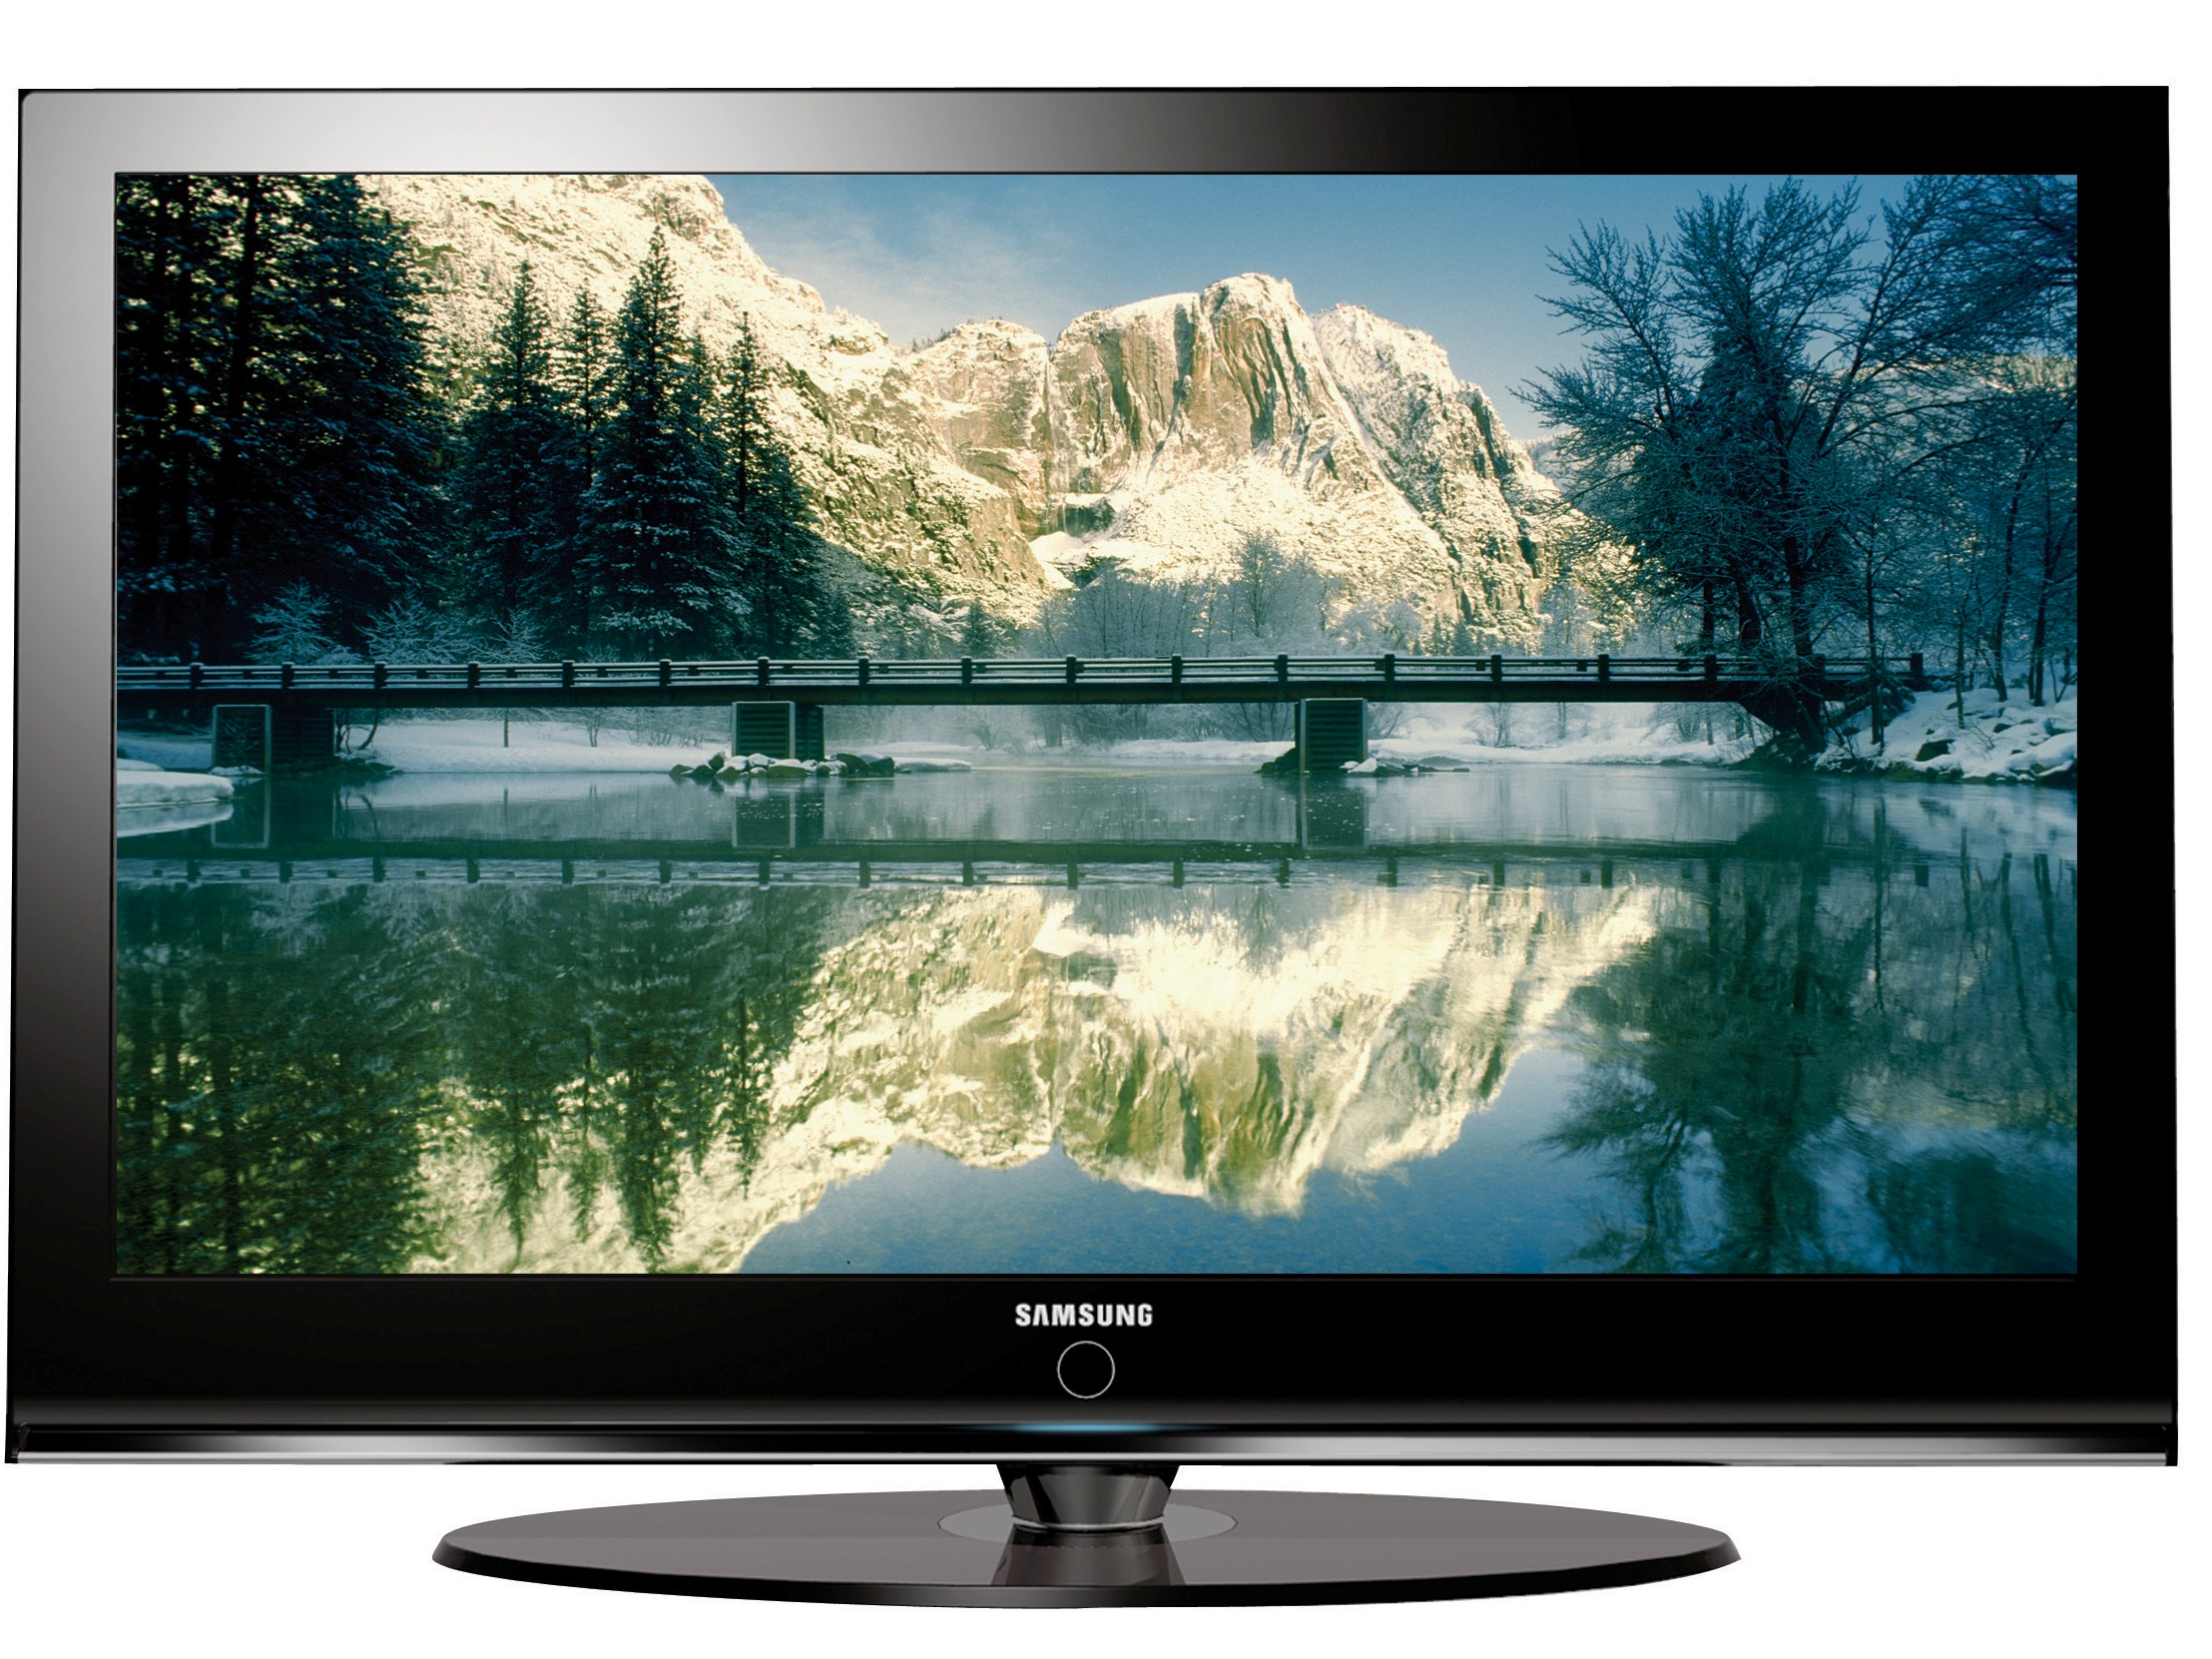 Купить телевизор 60 см. Samsung 2007 телевизор плазма. Телевизор Samsung Ln-t5265f. Телевизор самсунг лсд 2007. Samsung le40.